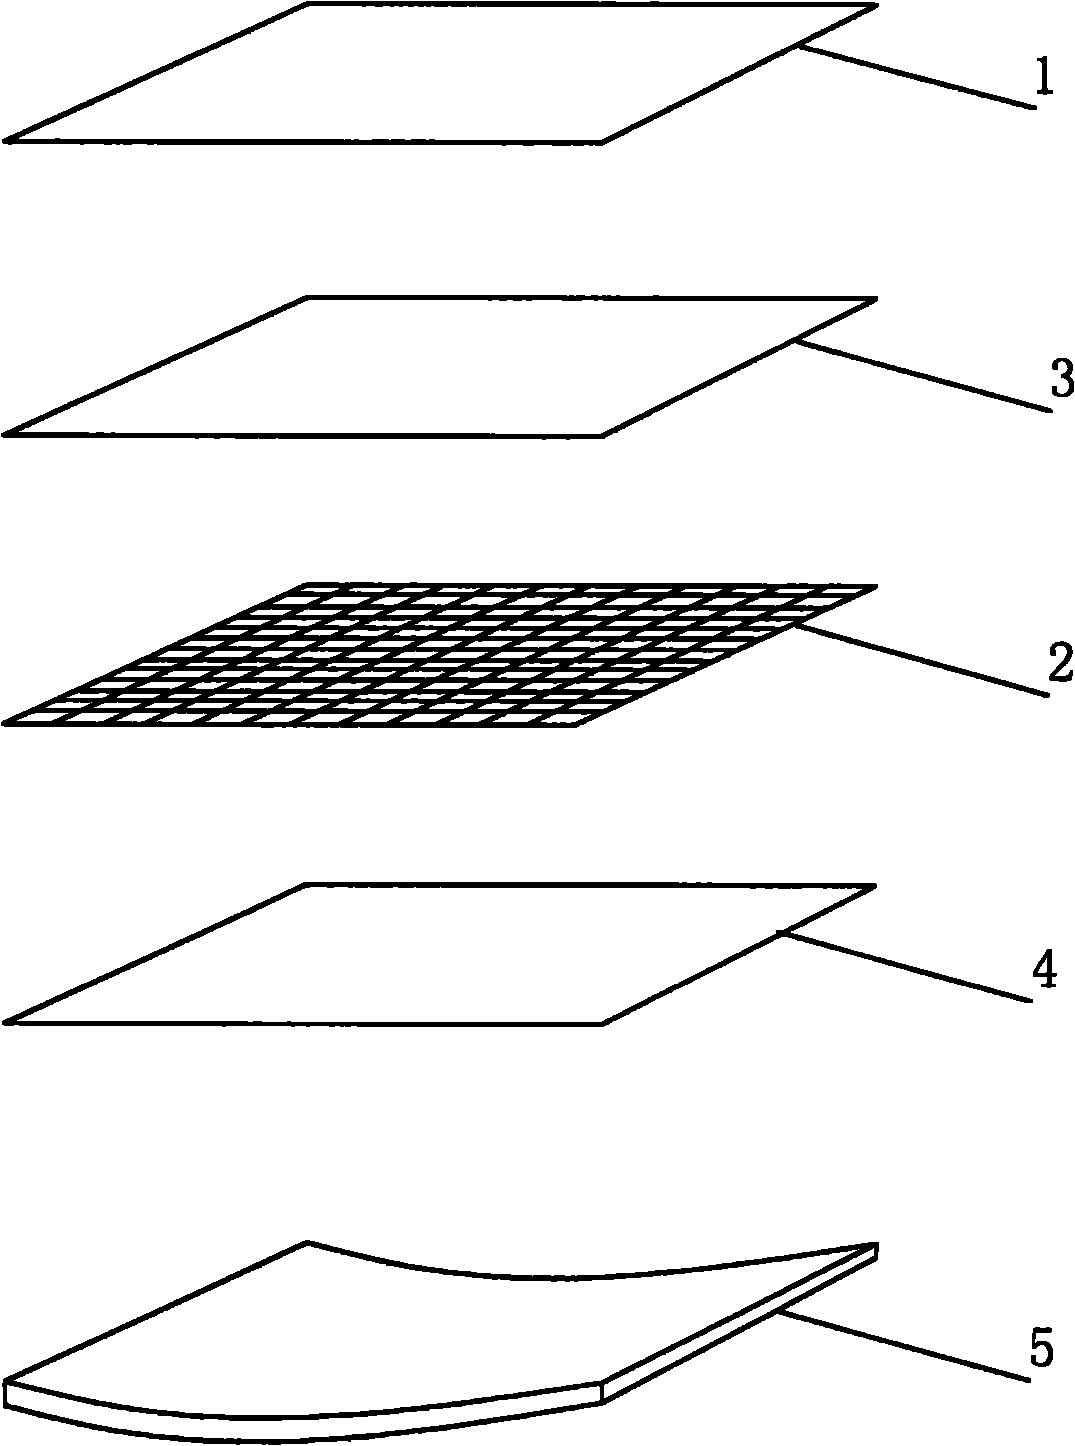 Production method of arc-shaped solar panel